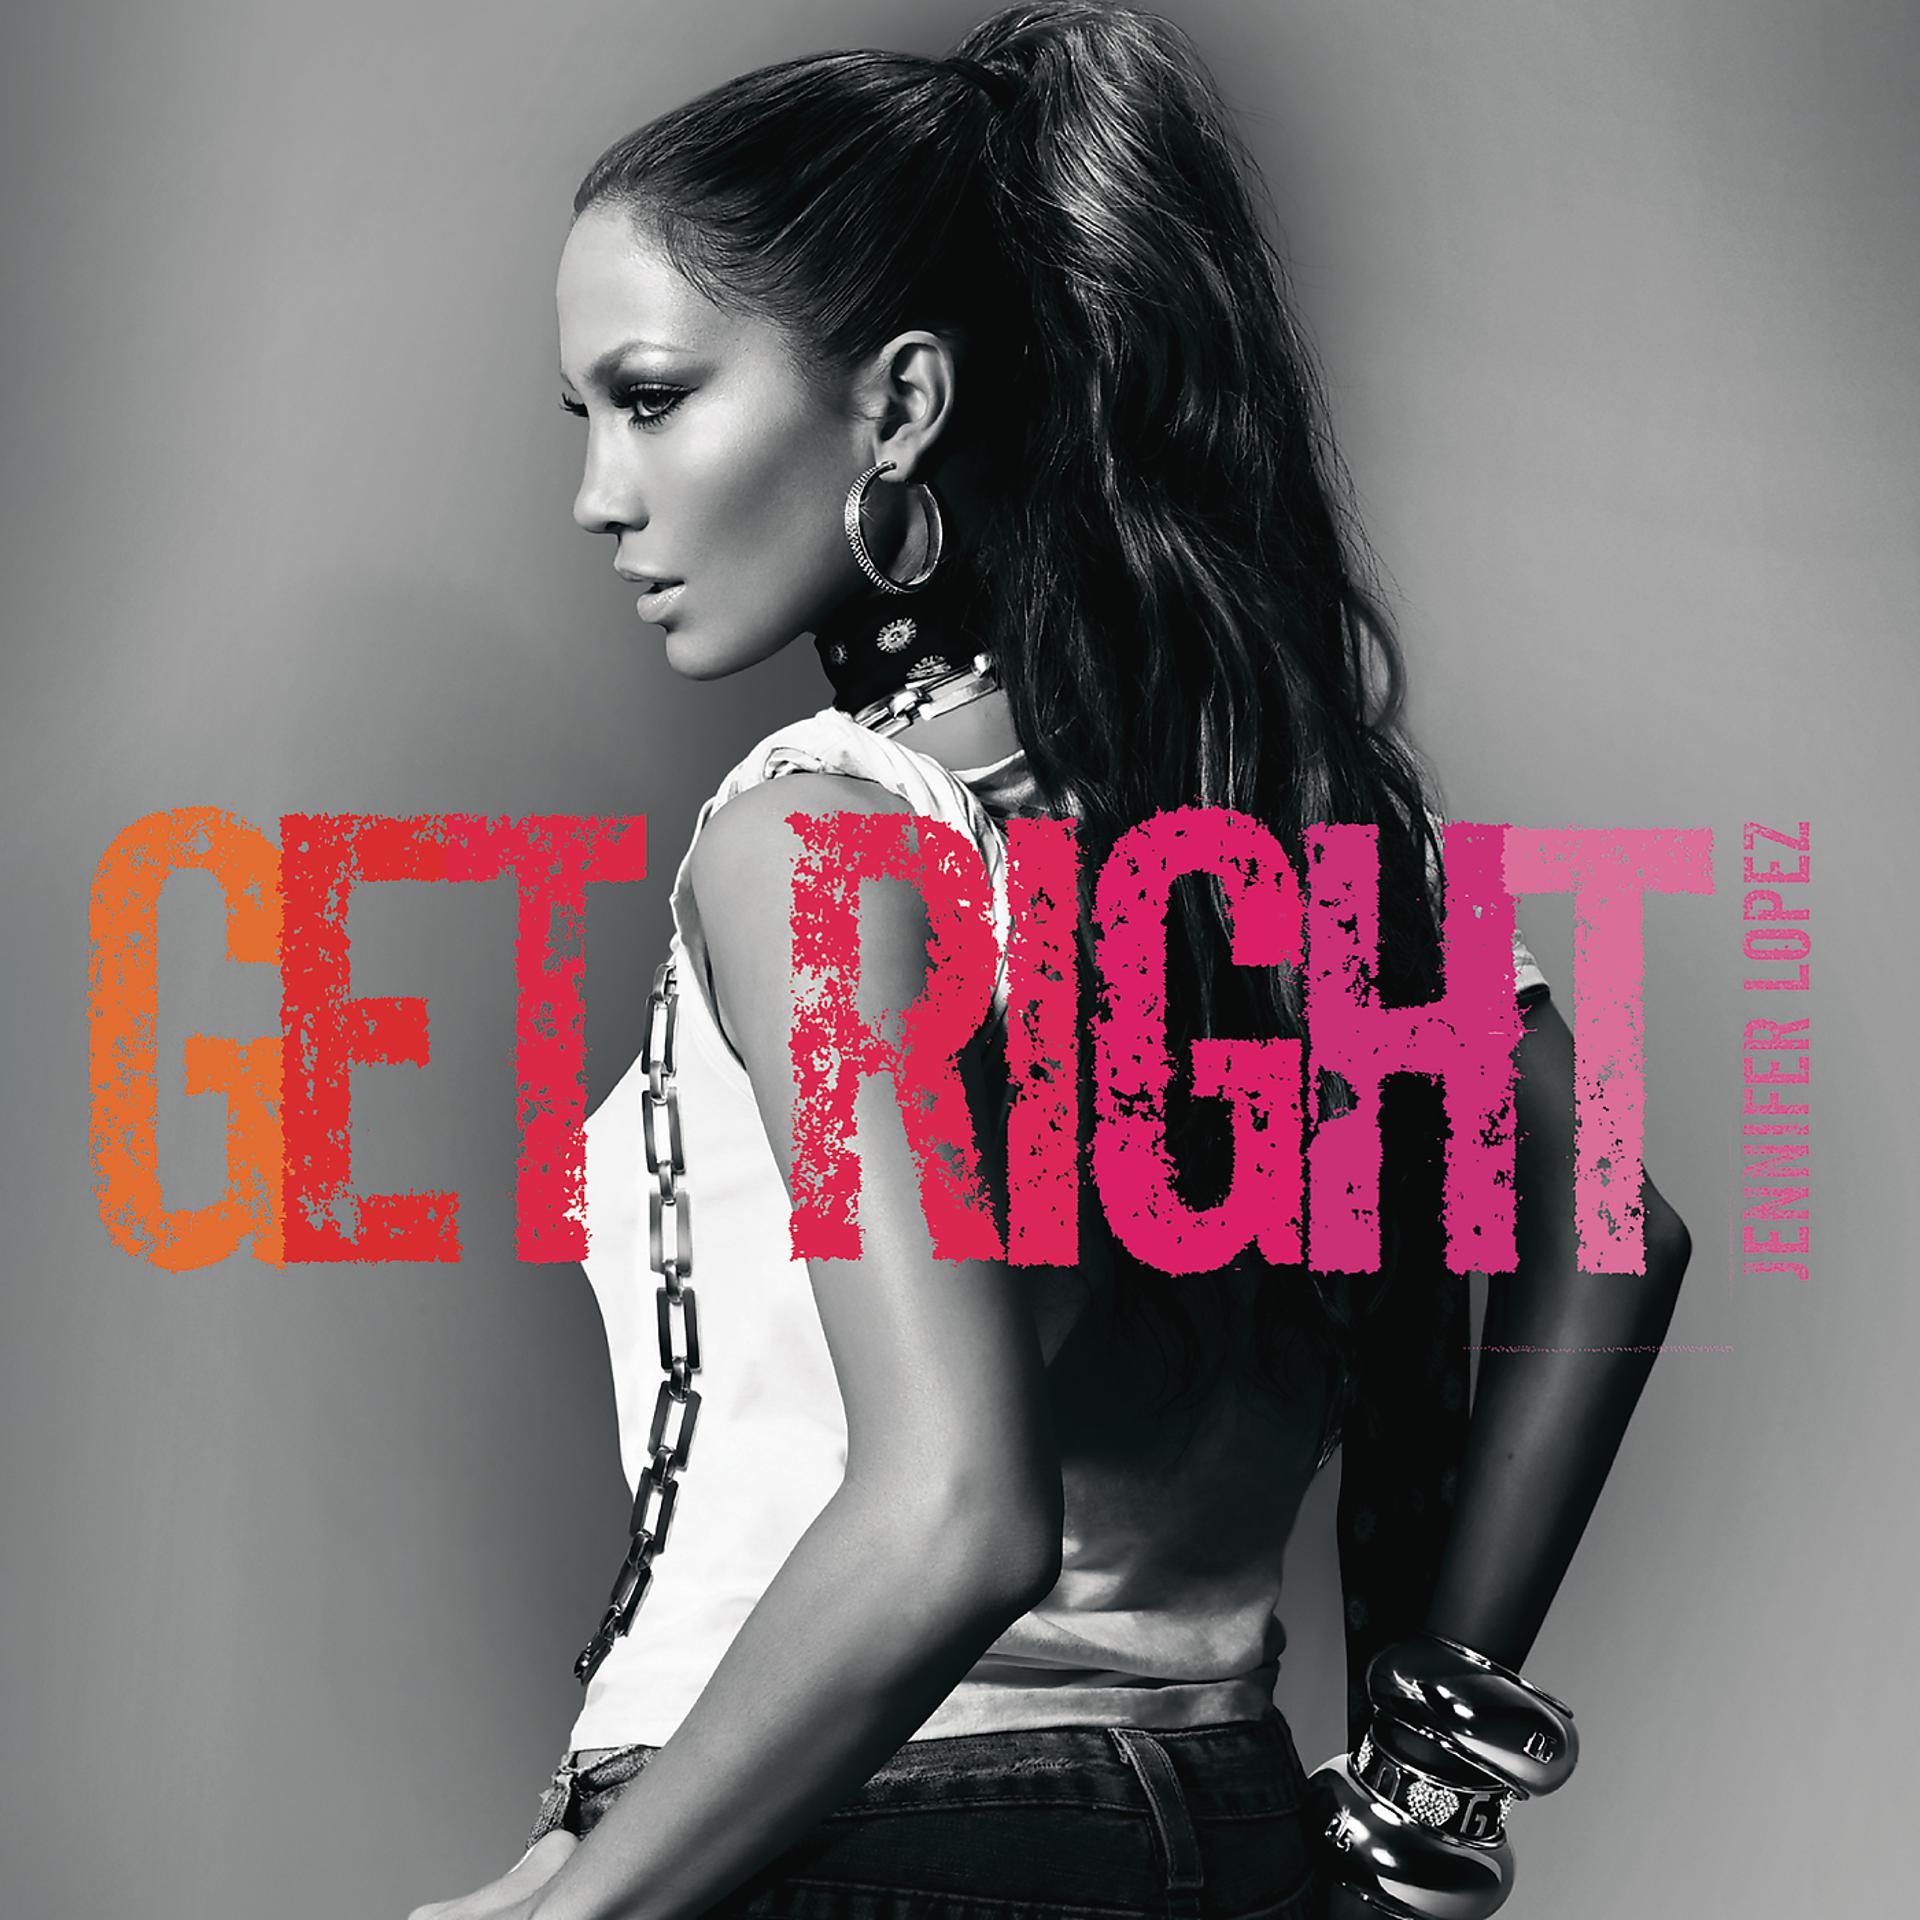 Get right Jennifer Lopez обложка. Музыка лопеса